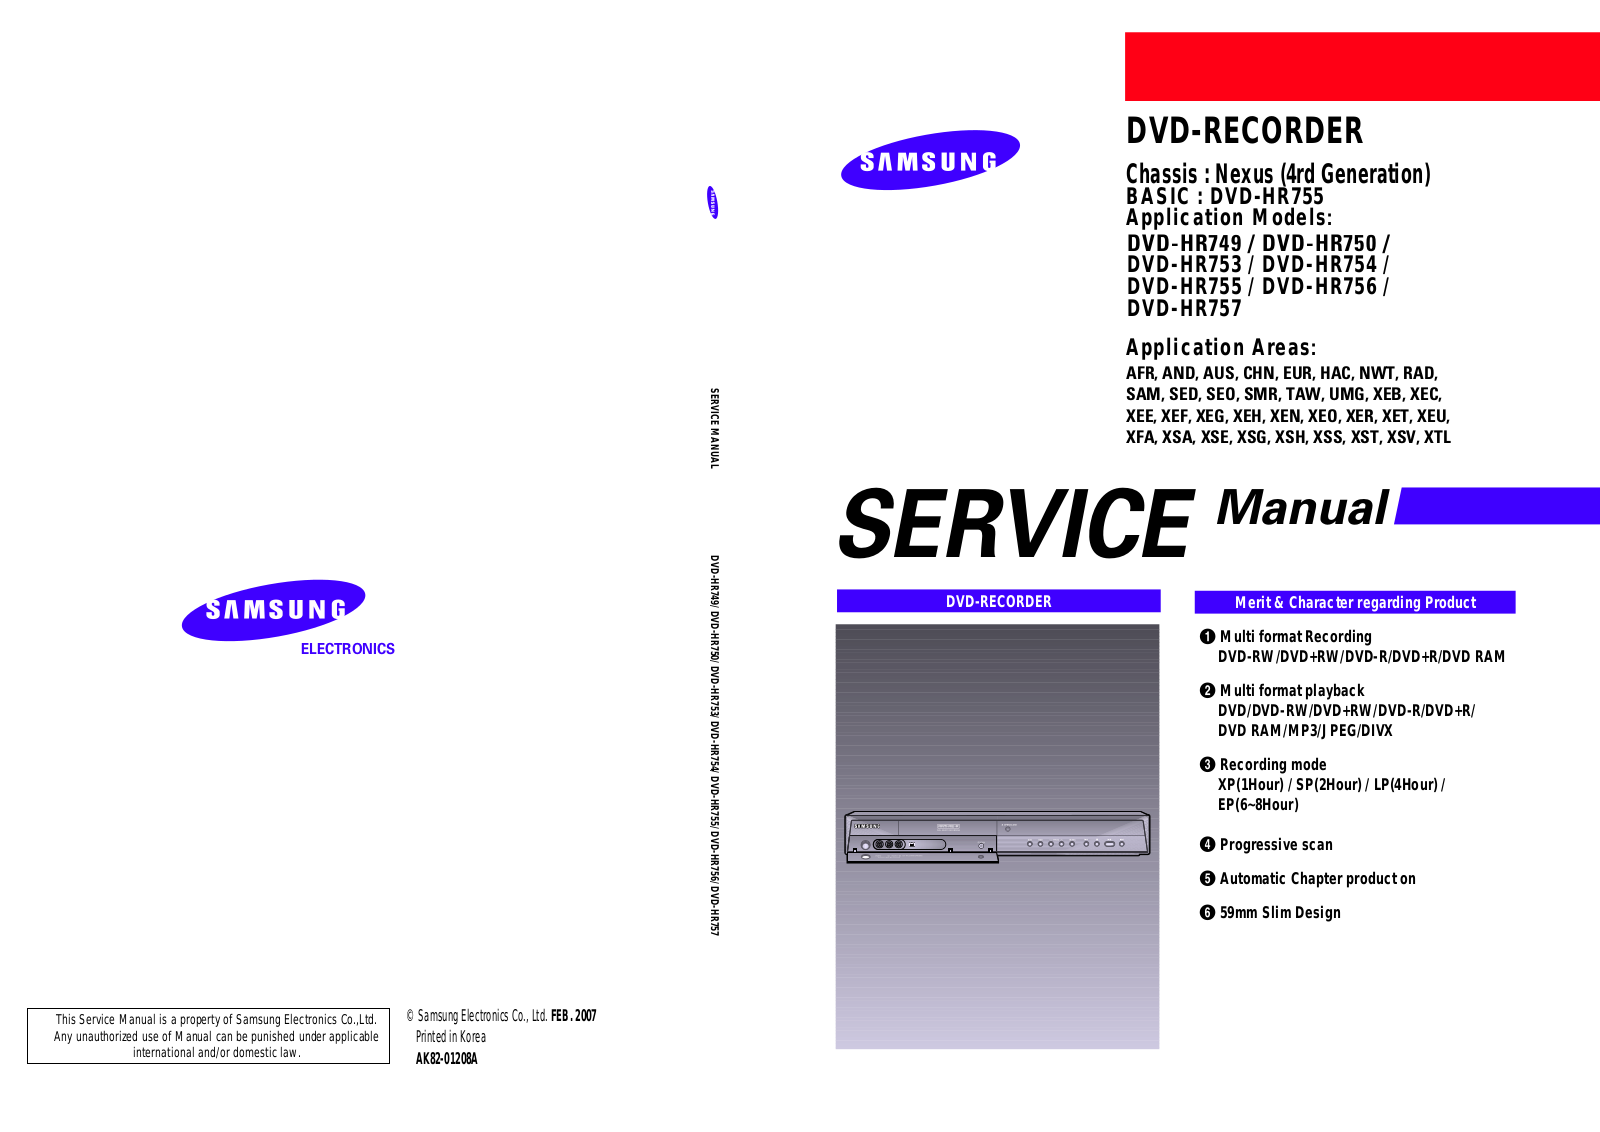 Samsung DVD-HR750, DVD-HR749, DVD-HR753, DVD-HR754, DVD-HR755 Service Manual